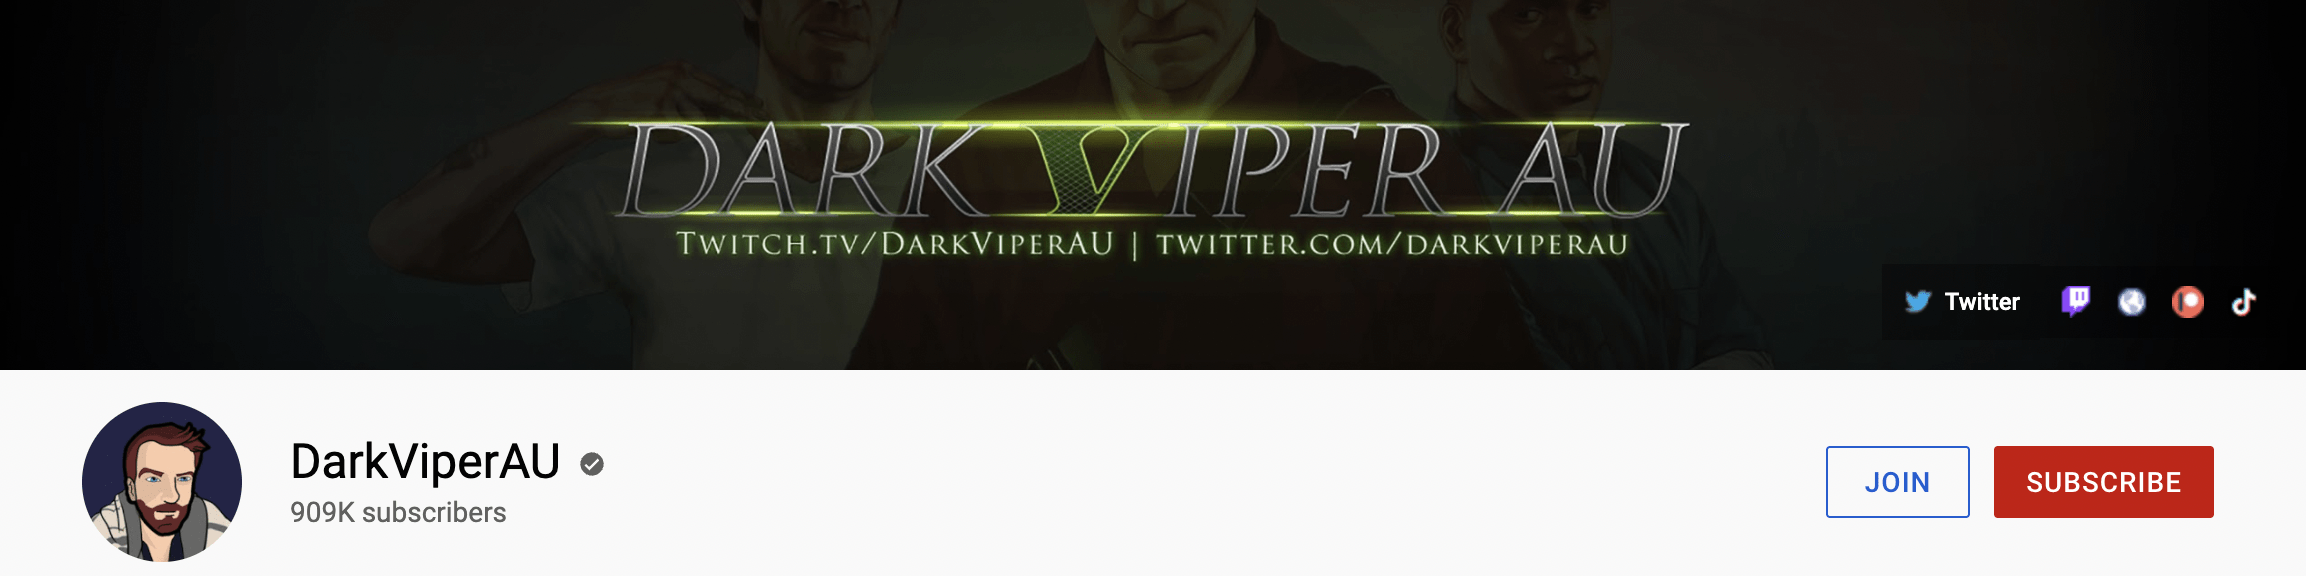 DarkViperAU Youtube Channel